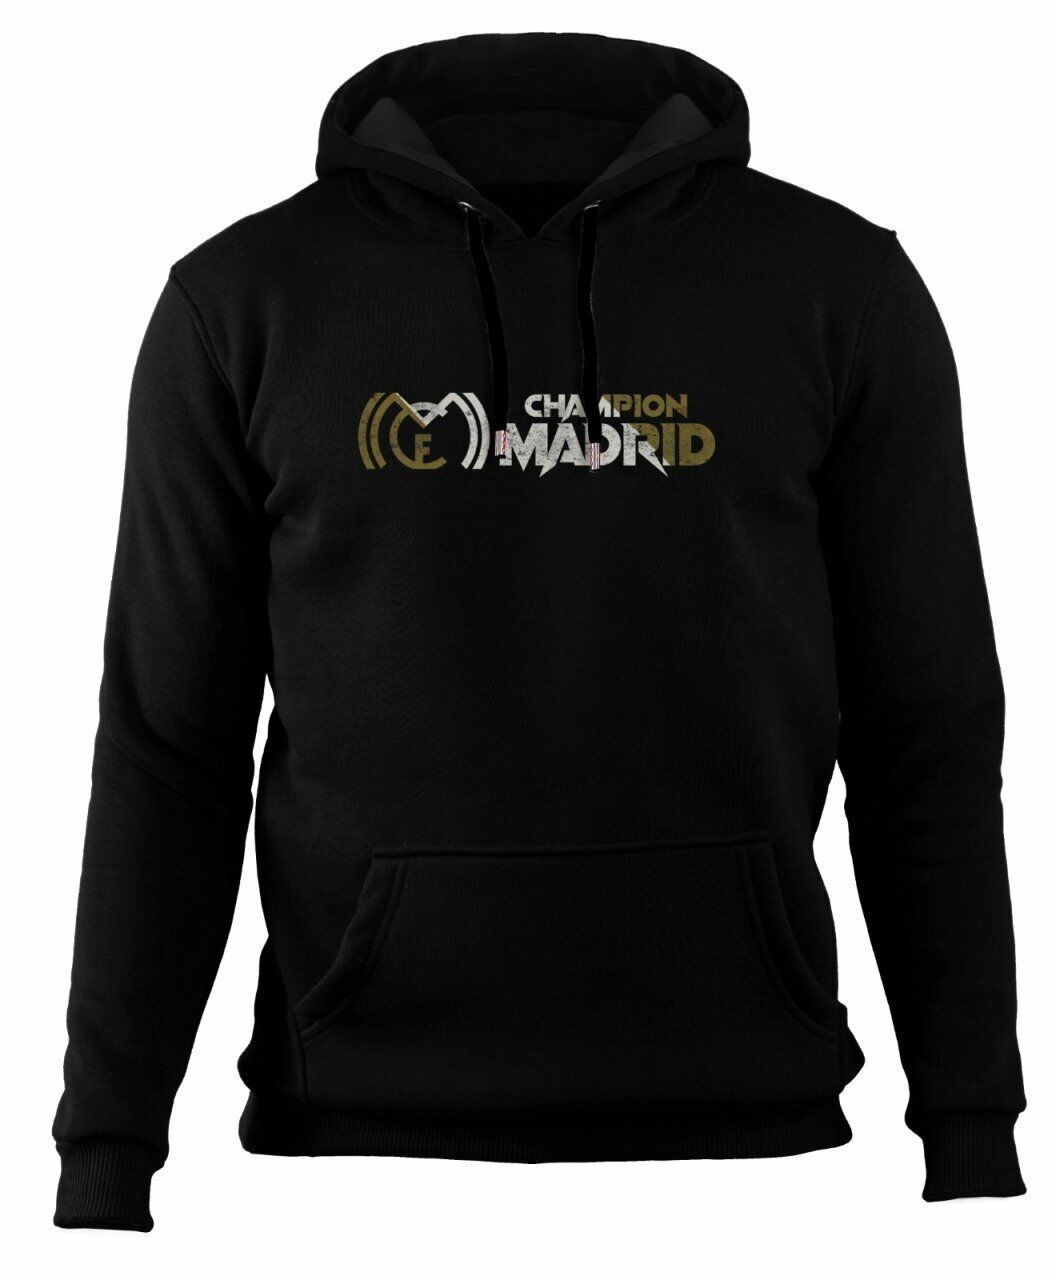 Real Madrid - Champion Sweatshirt